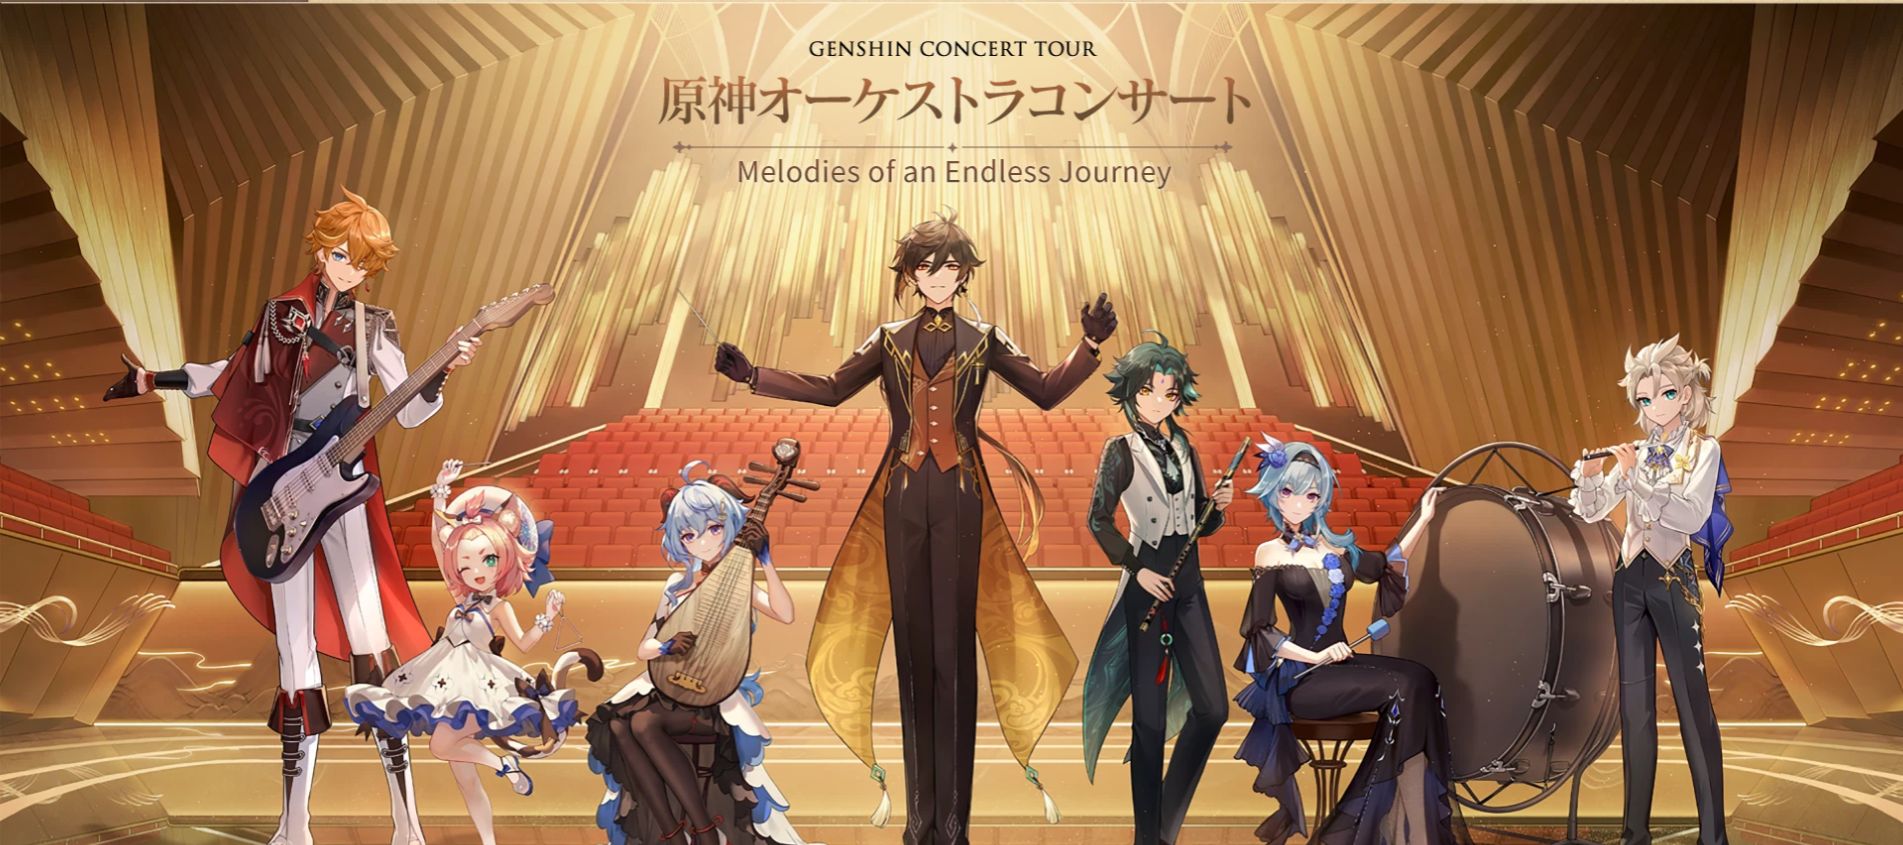 "Genshin Concert Tour: Melodies of an Endless Journey"